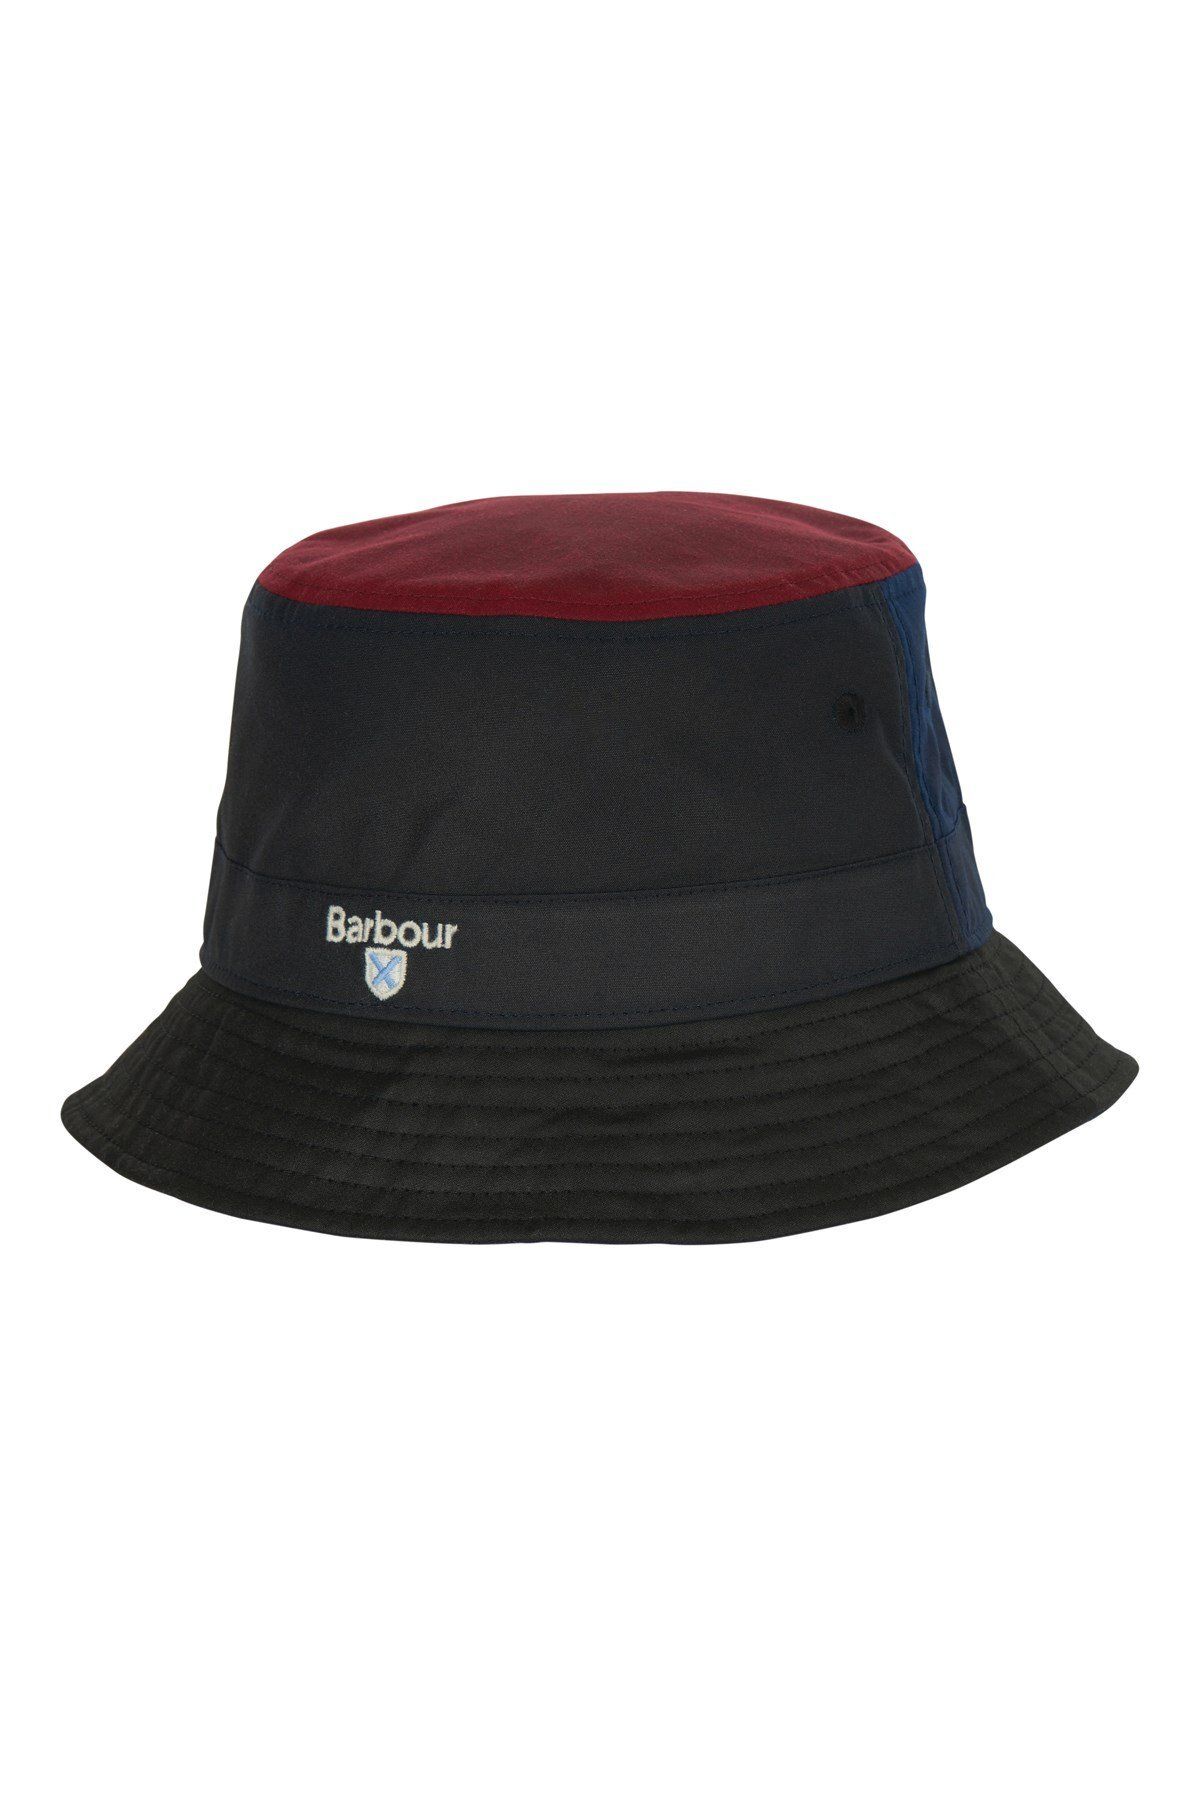 Barbour Alderton Sports Hat NY91 Navy/Black/Biking Red